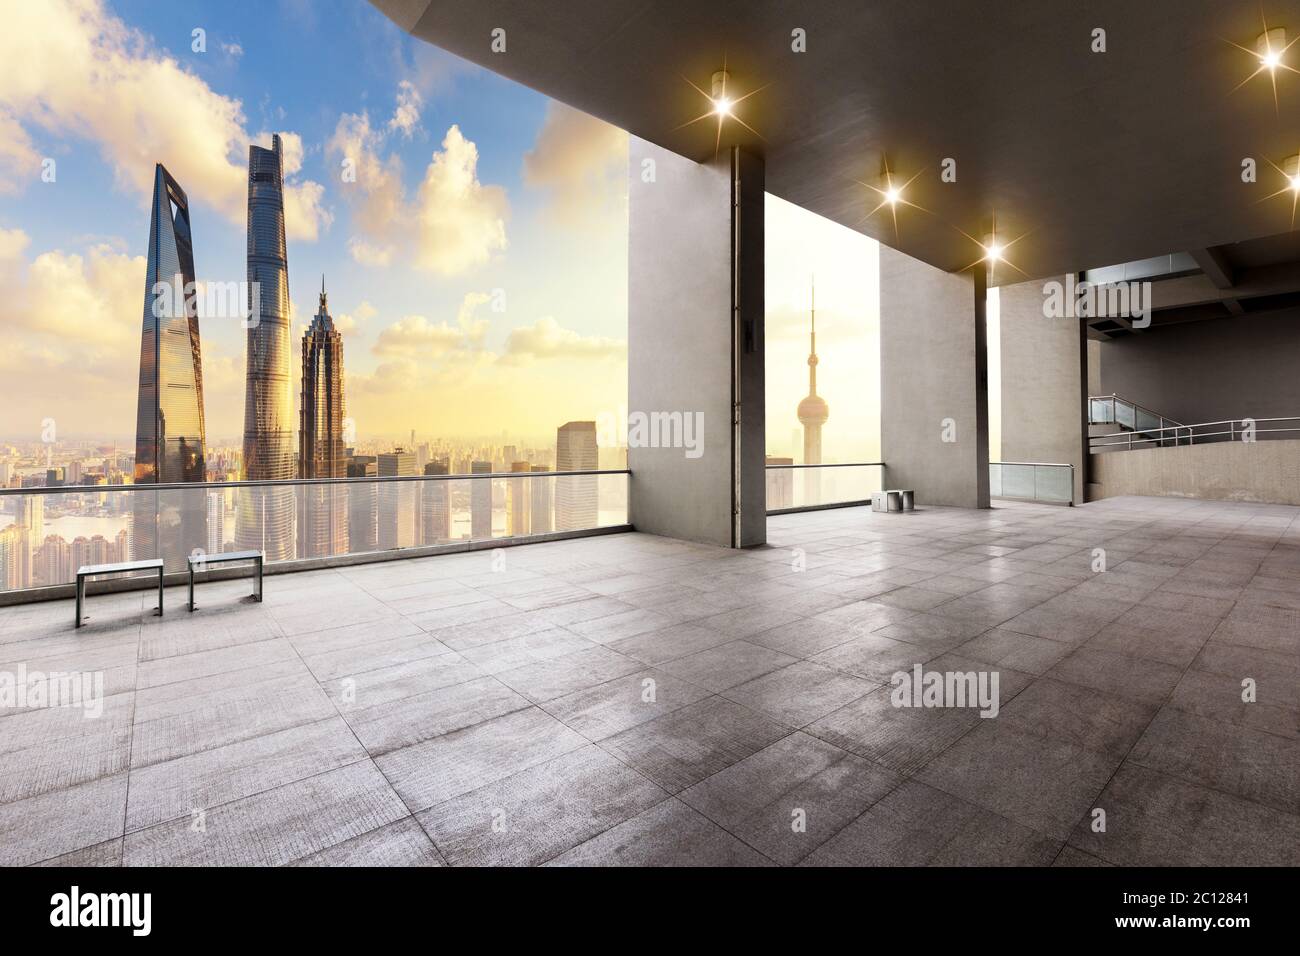 cityscape and skyline of shanghai from empty brick floor Stock Photo